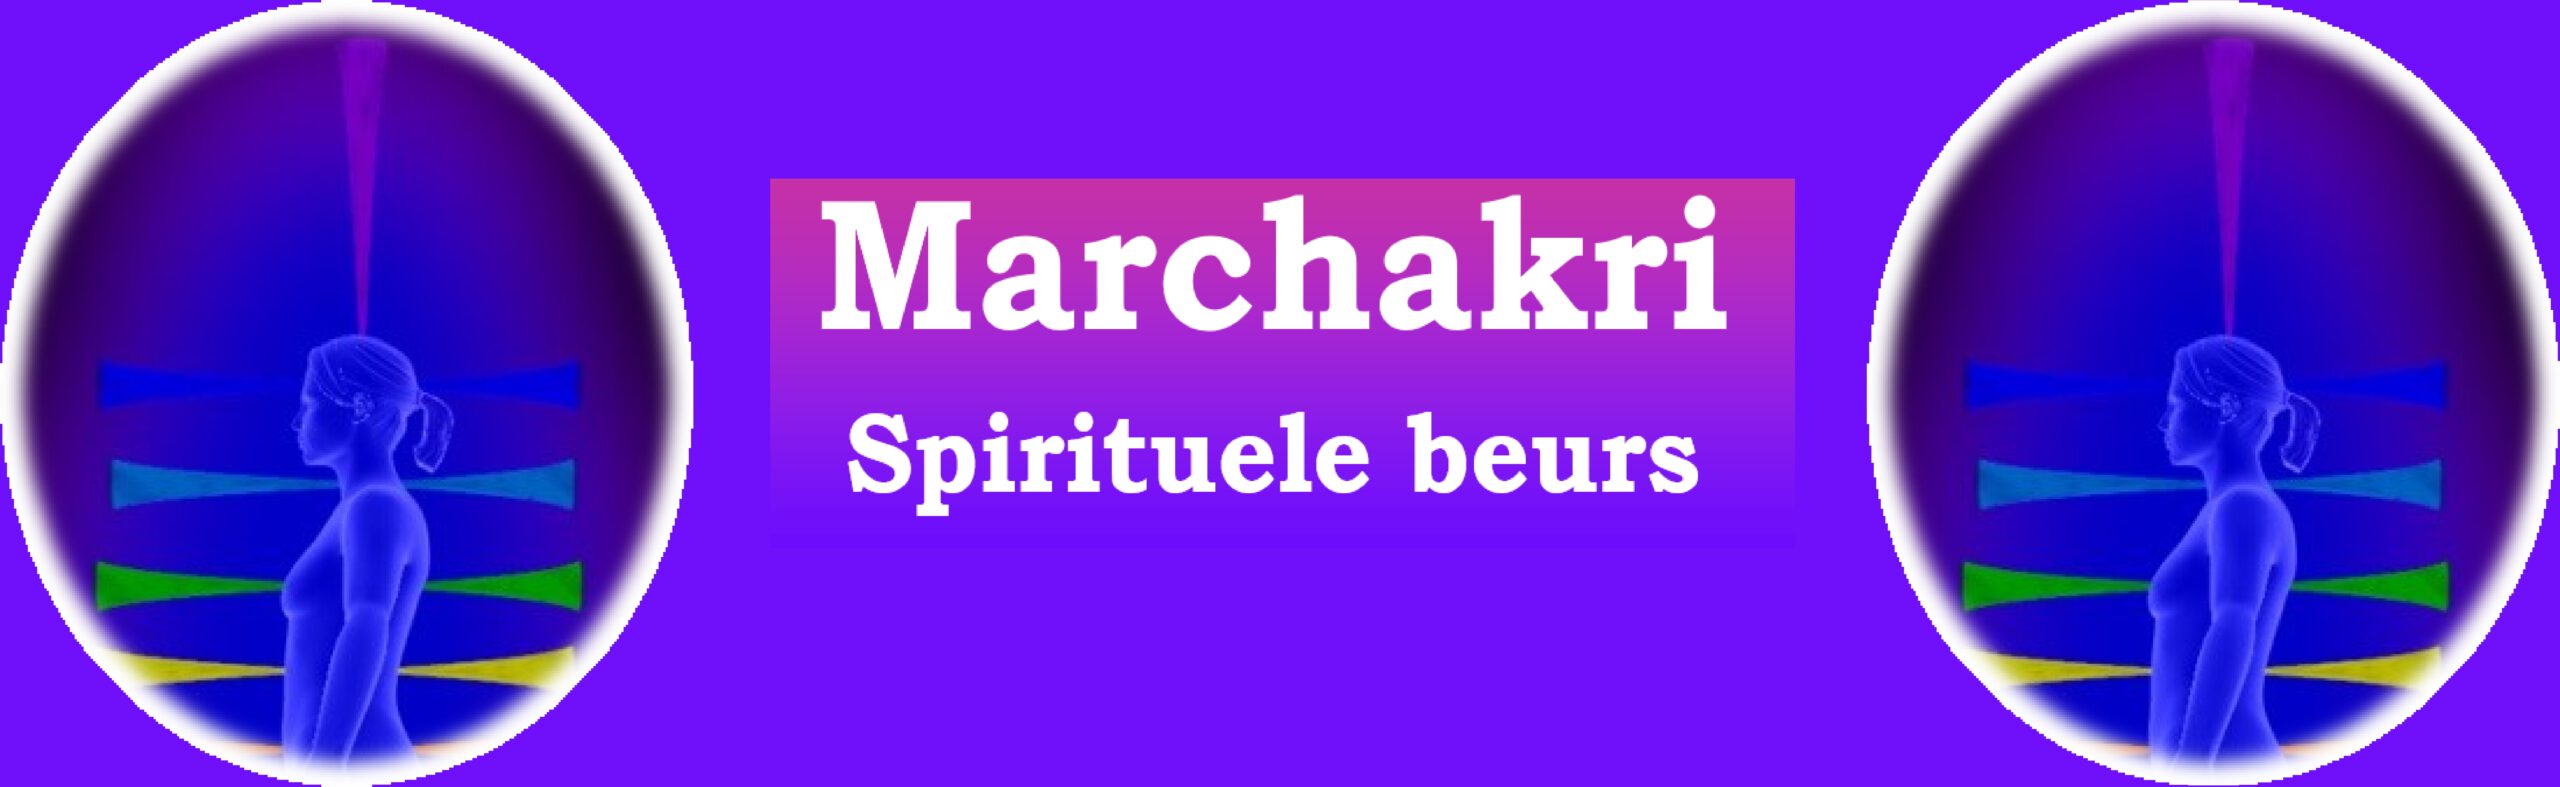 Marchakri Spirituelebeurs